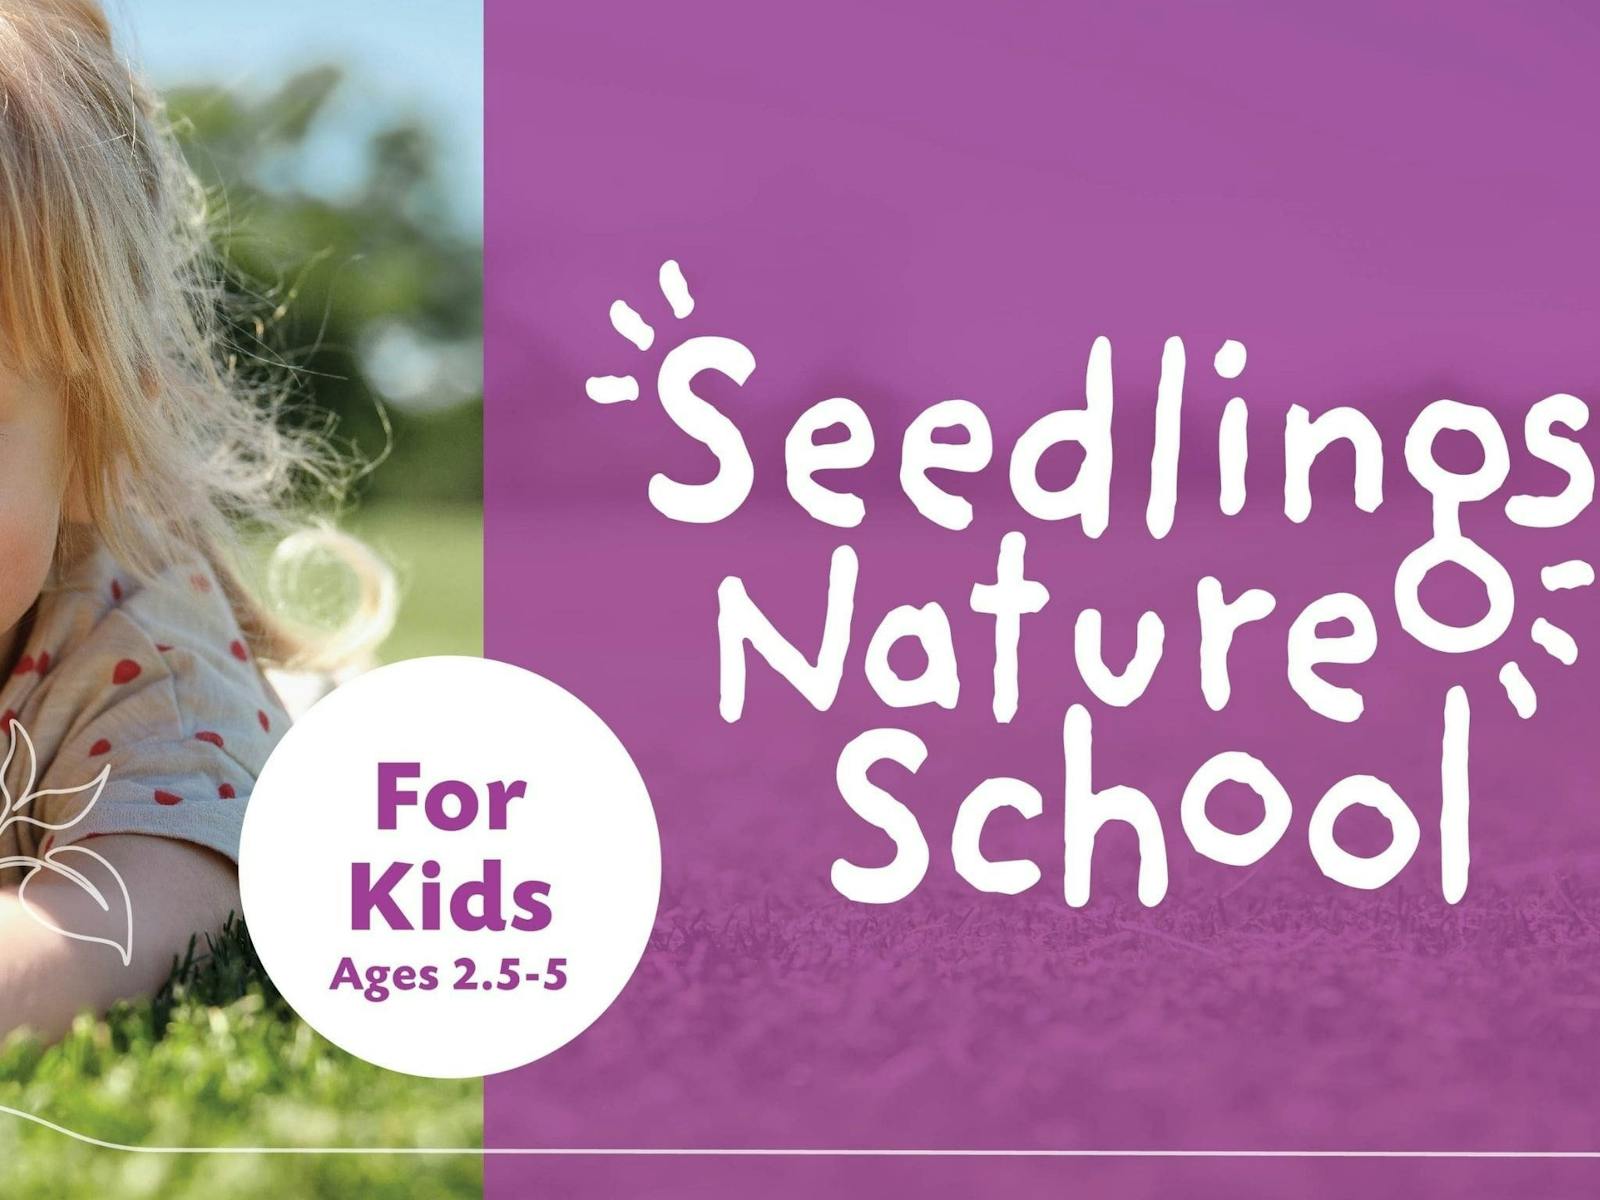 Image for Seedlings Nature School